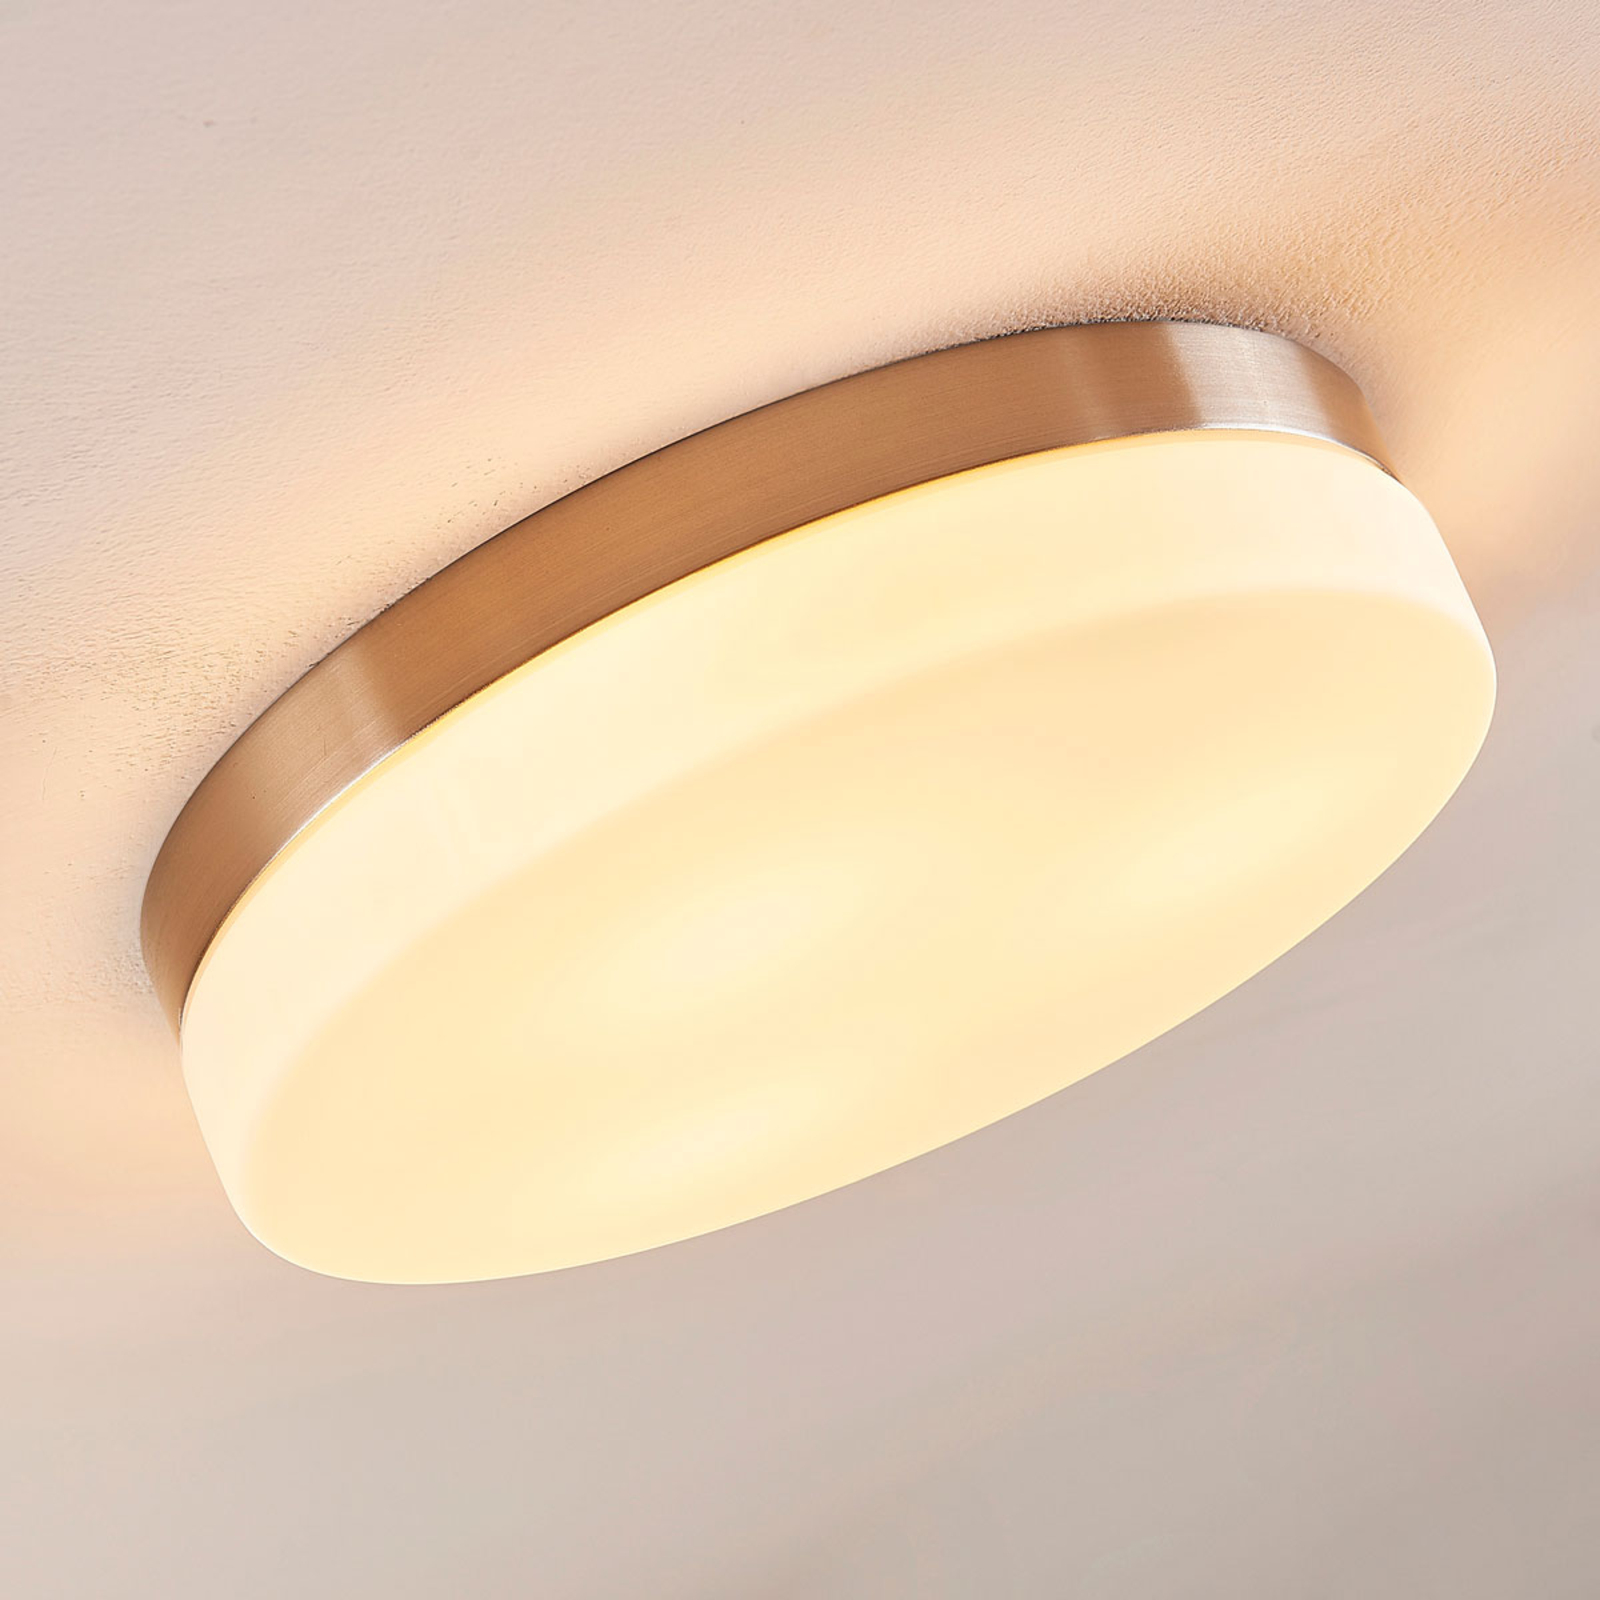 Badkamer-plafondlamp Amilia met glazen kap Ø 30 cm